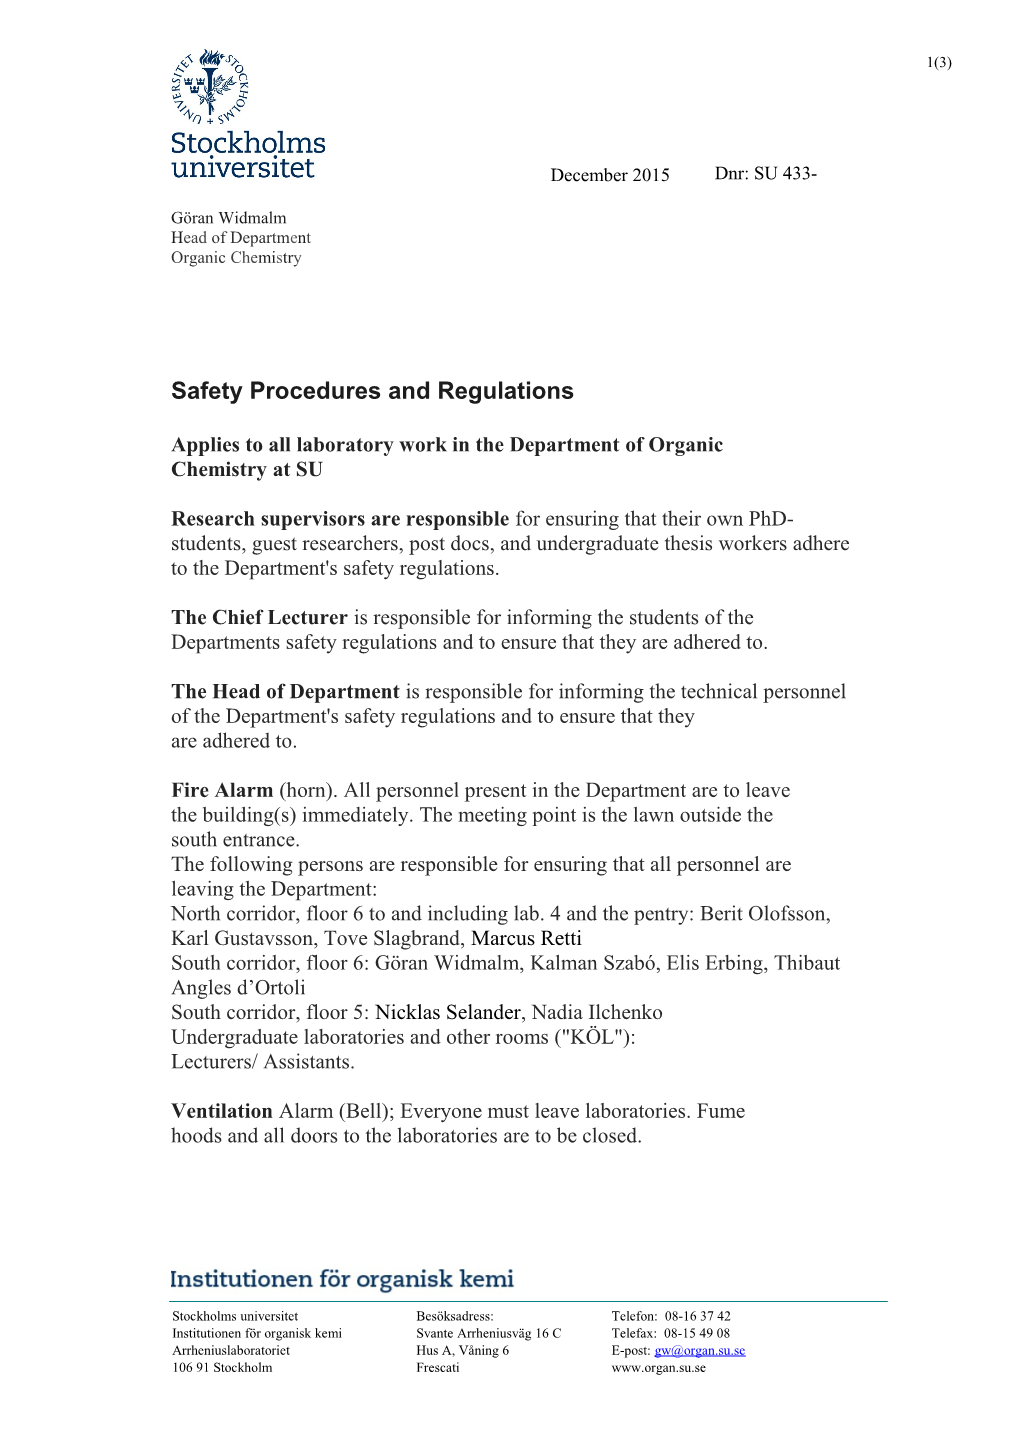 Safety Procedures and Regulations